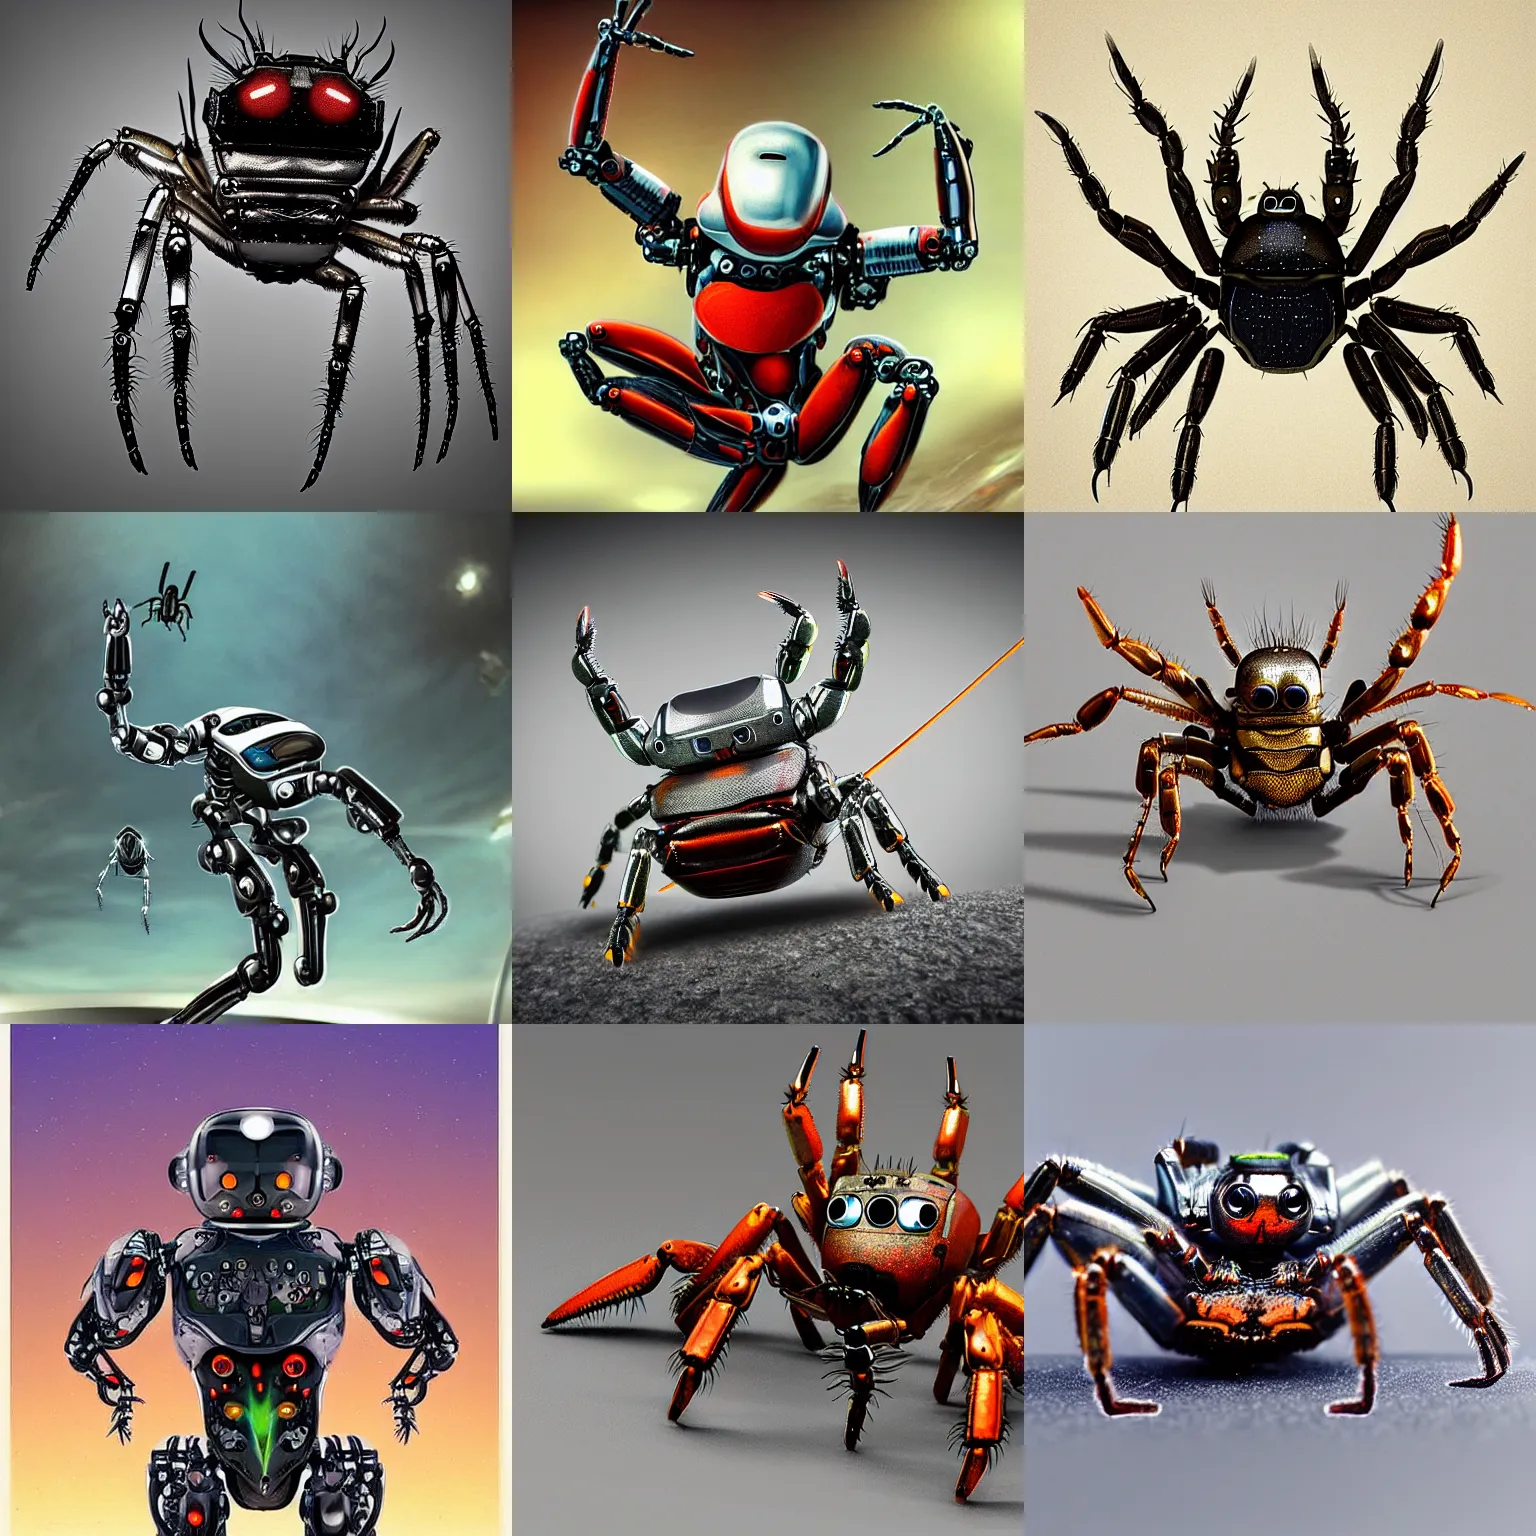 Prompt: cyborg robot, crab, jumping spider, realistic, futuristic